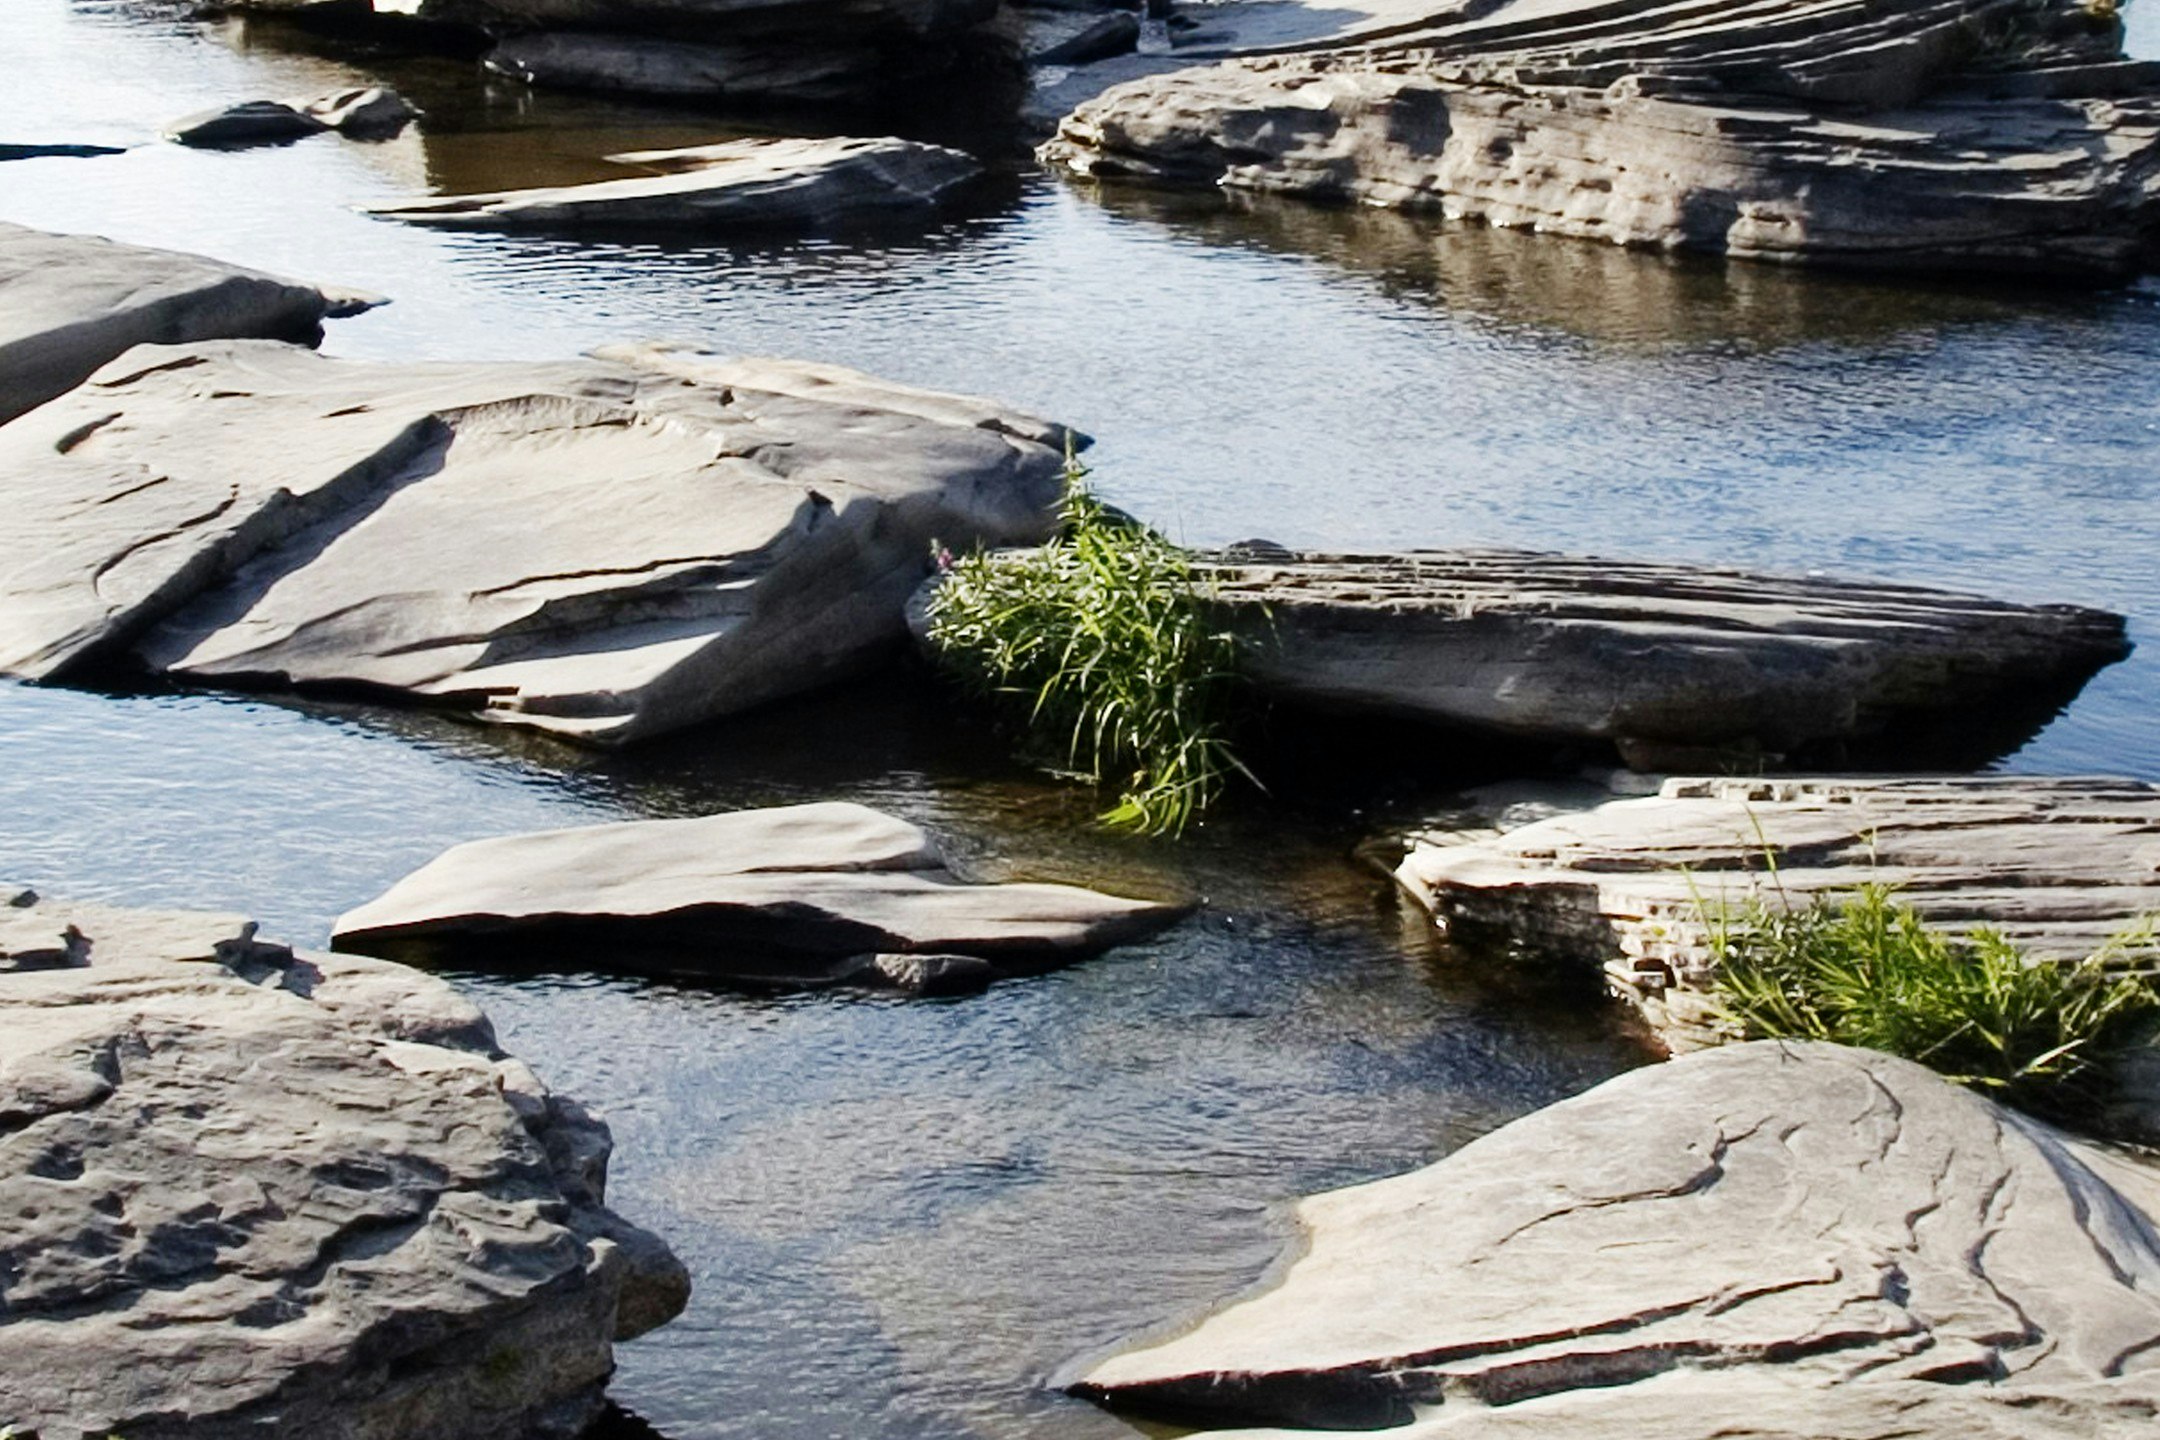  Rcoks in the river at Upper Delaware Scenic & Recreational River